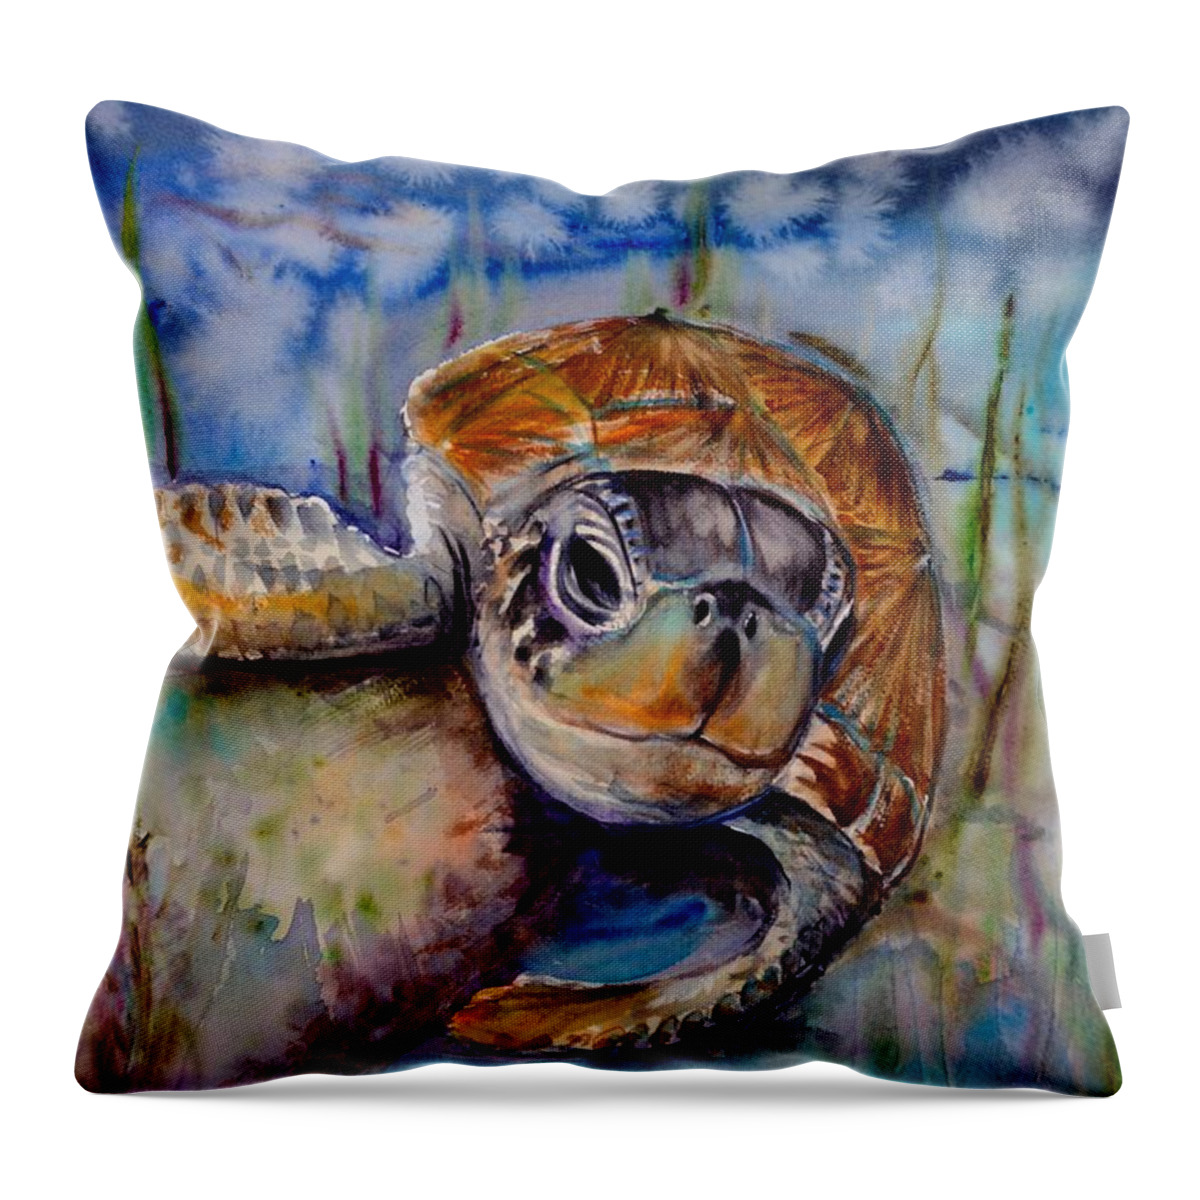 Sea Turtle Throw Pillow featuring the painting Sea turtle 4 by Katerina Kovatcheva